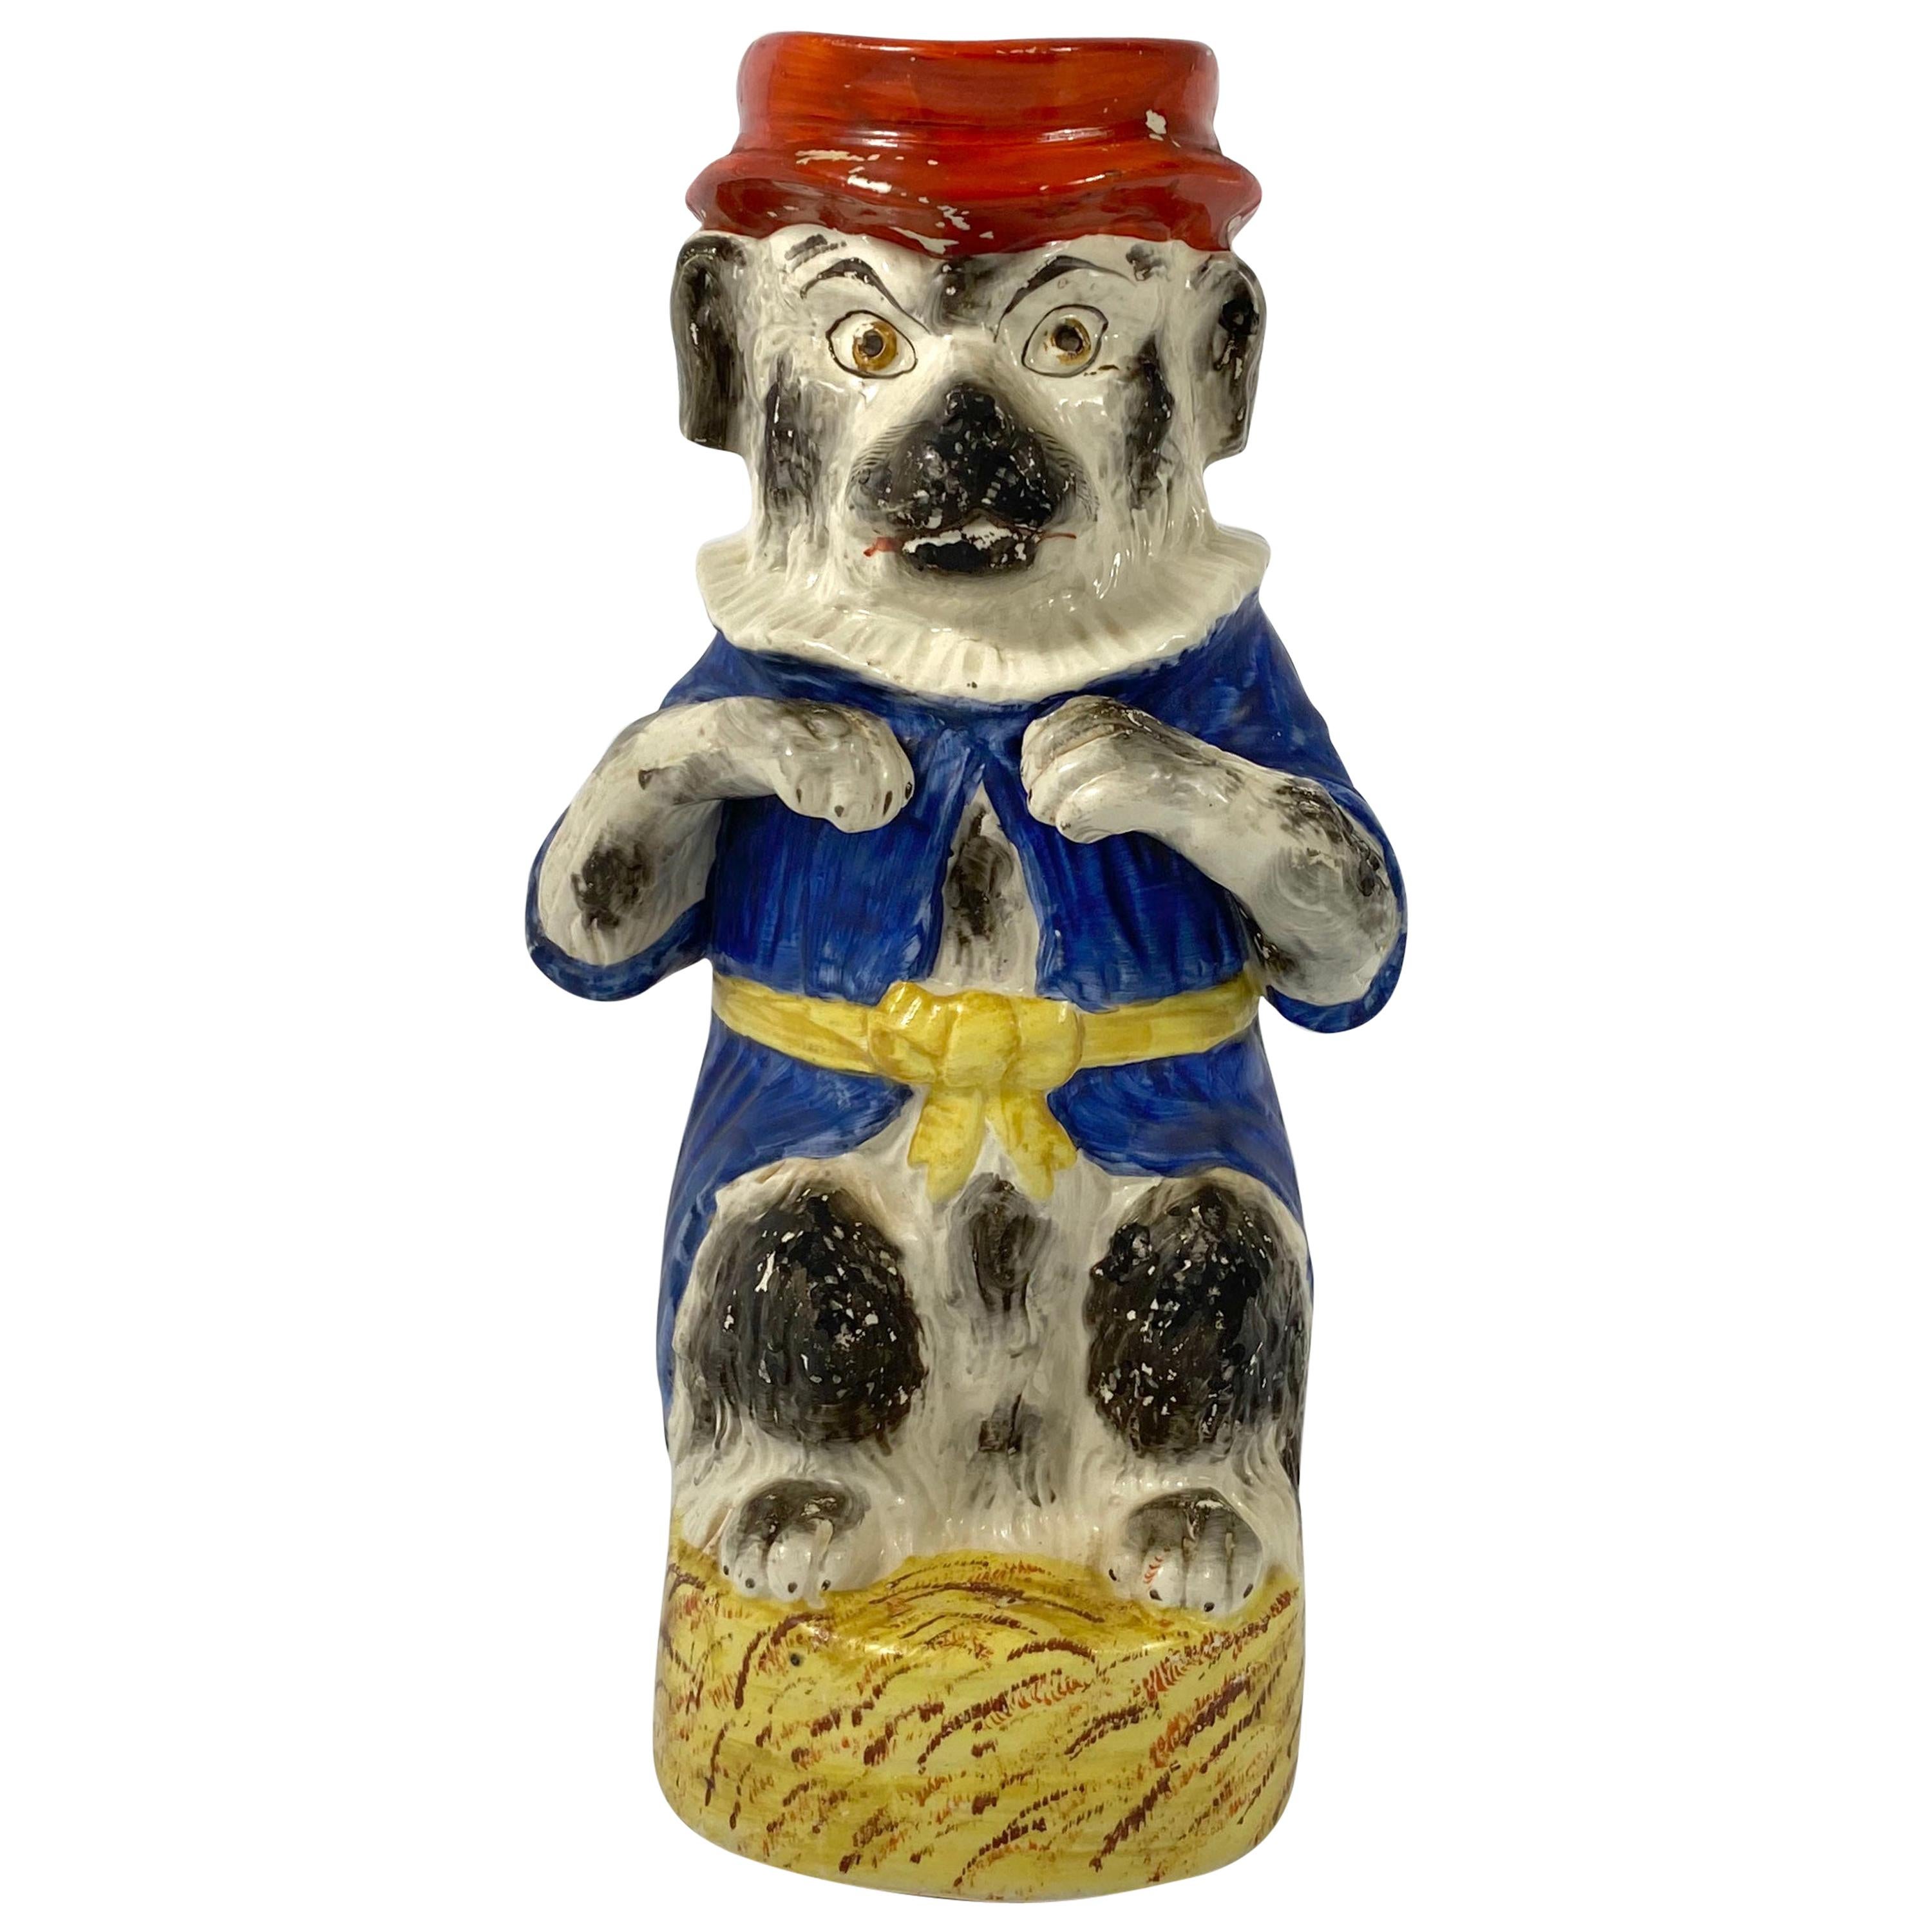 Rare Staffordshire Mr Punch’s Dog ‘Toby’ Jug, circa 1860